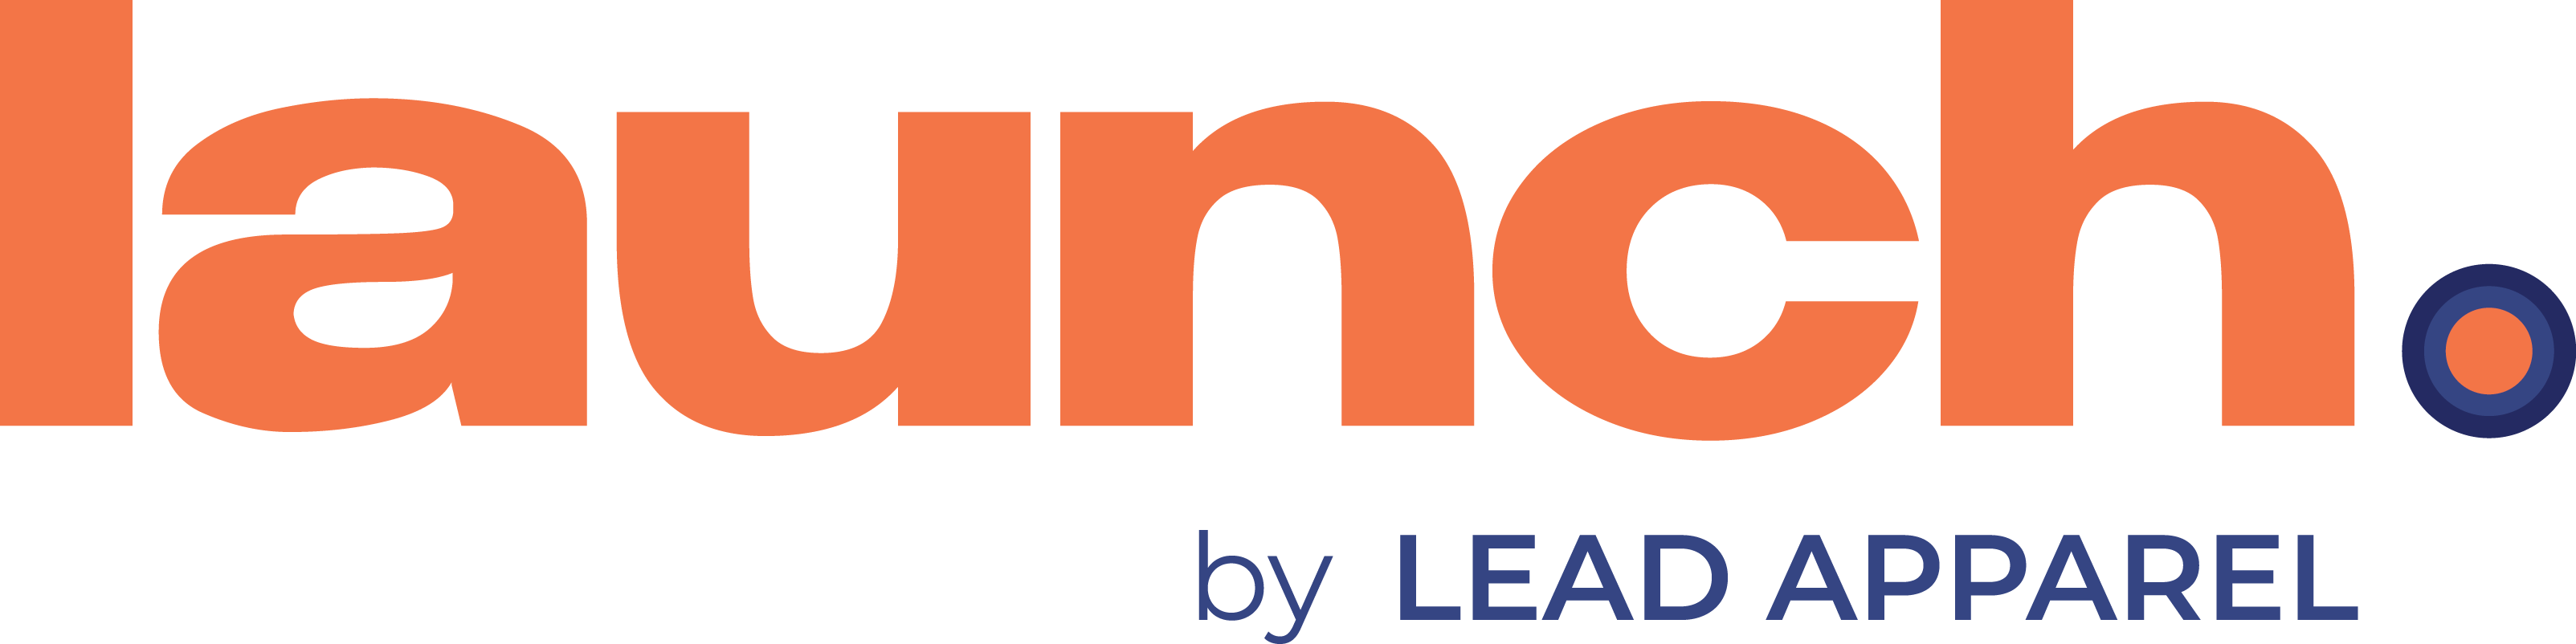 Launch by Lead Apparel logo